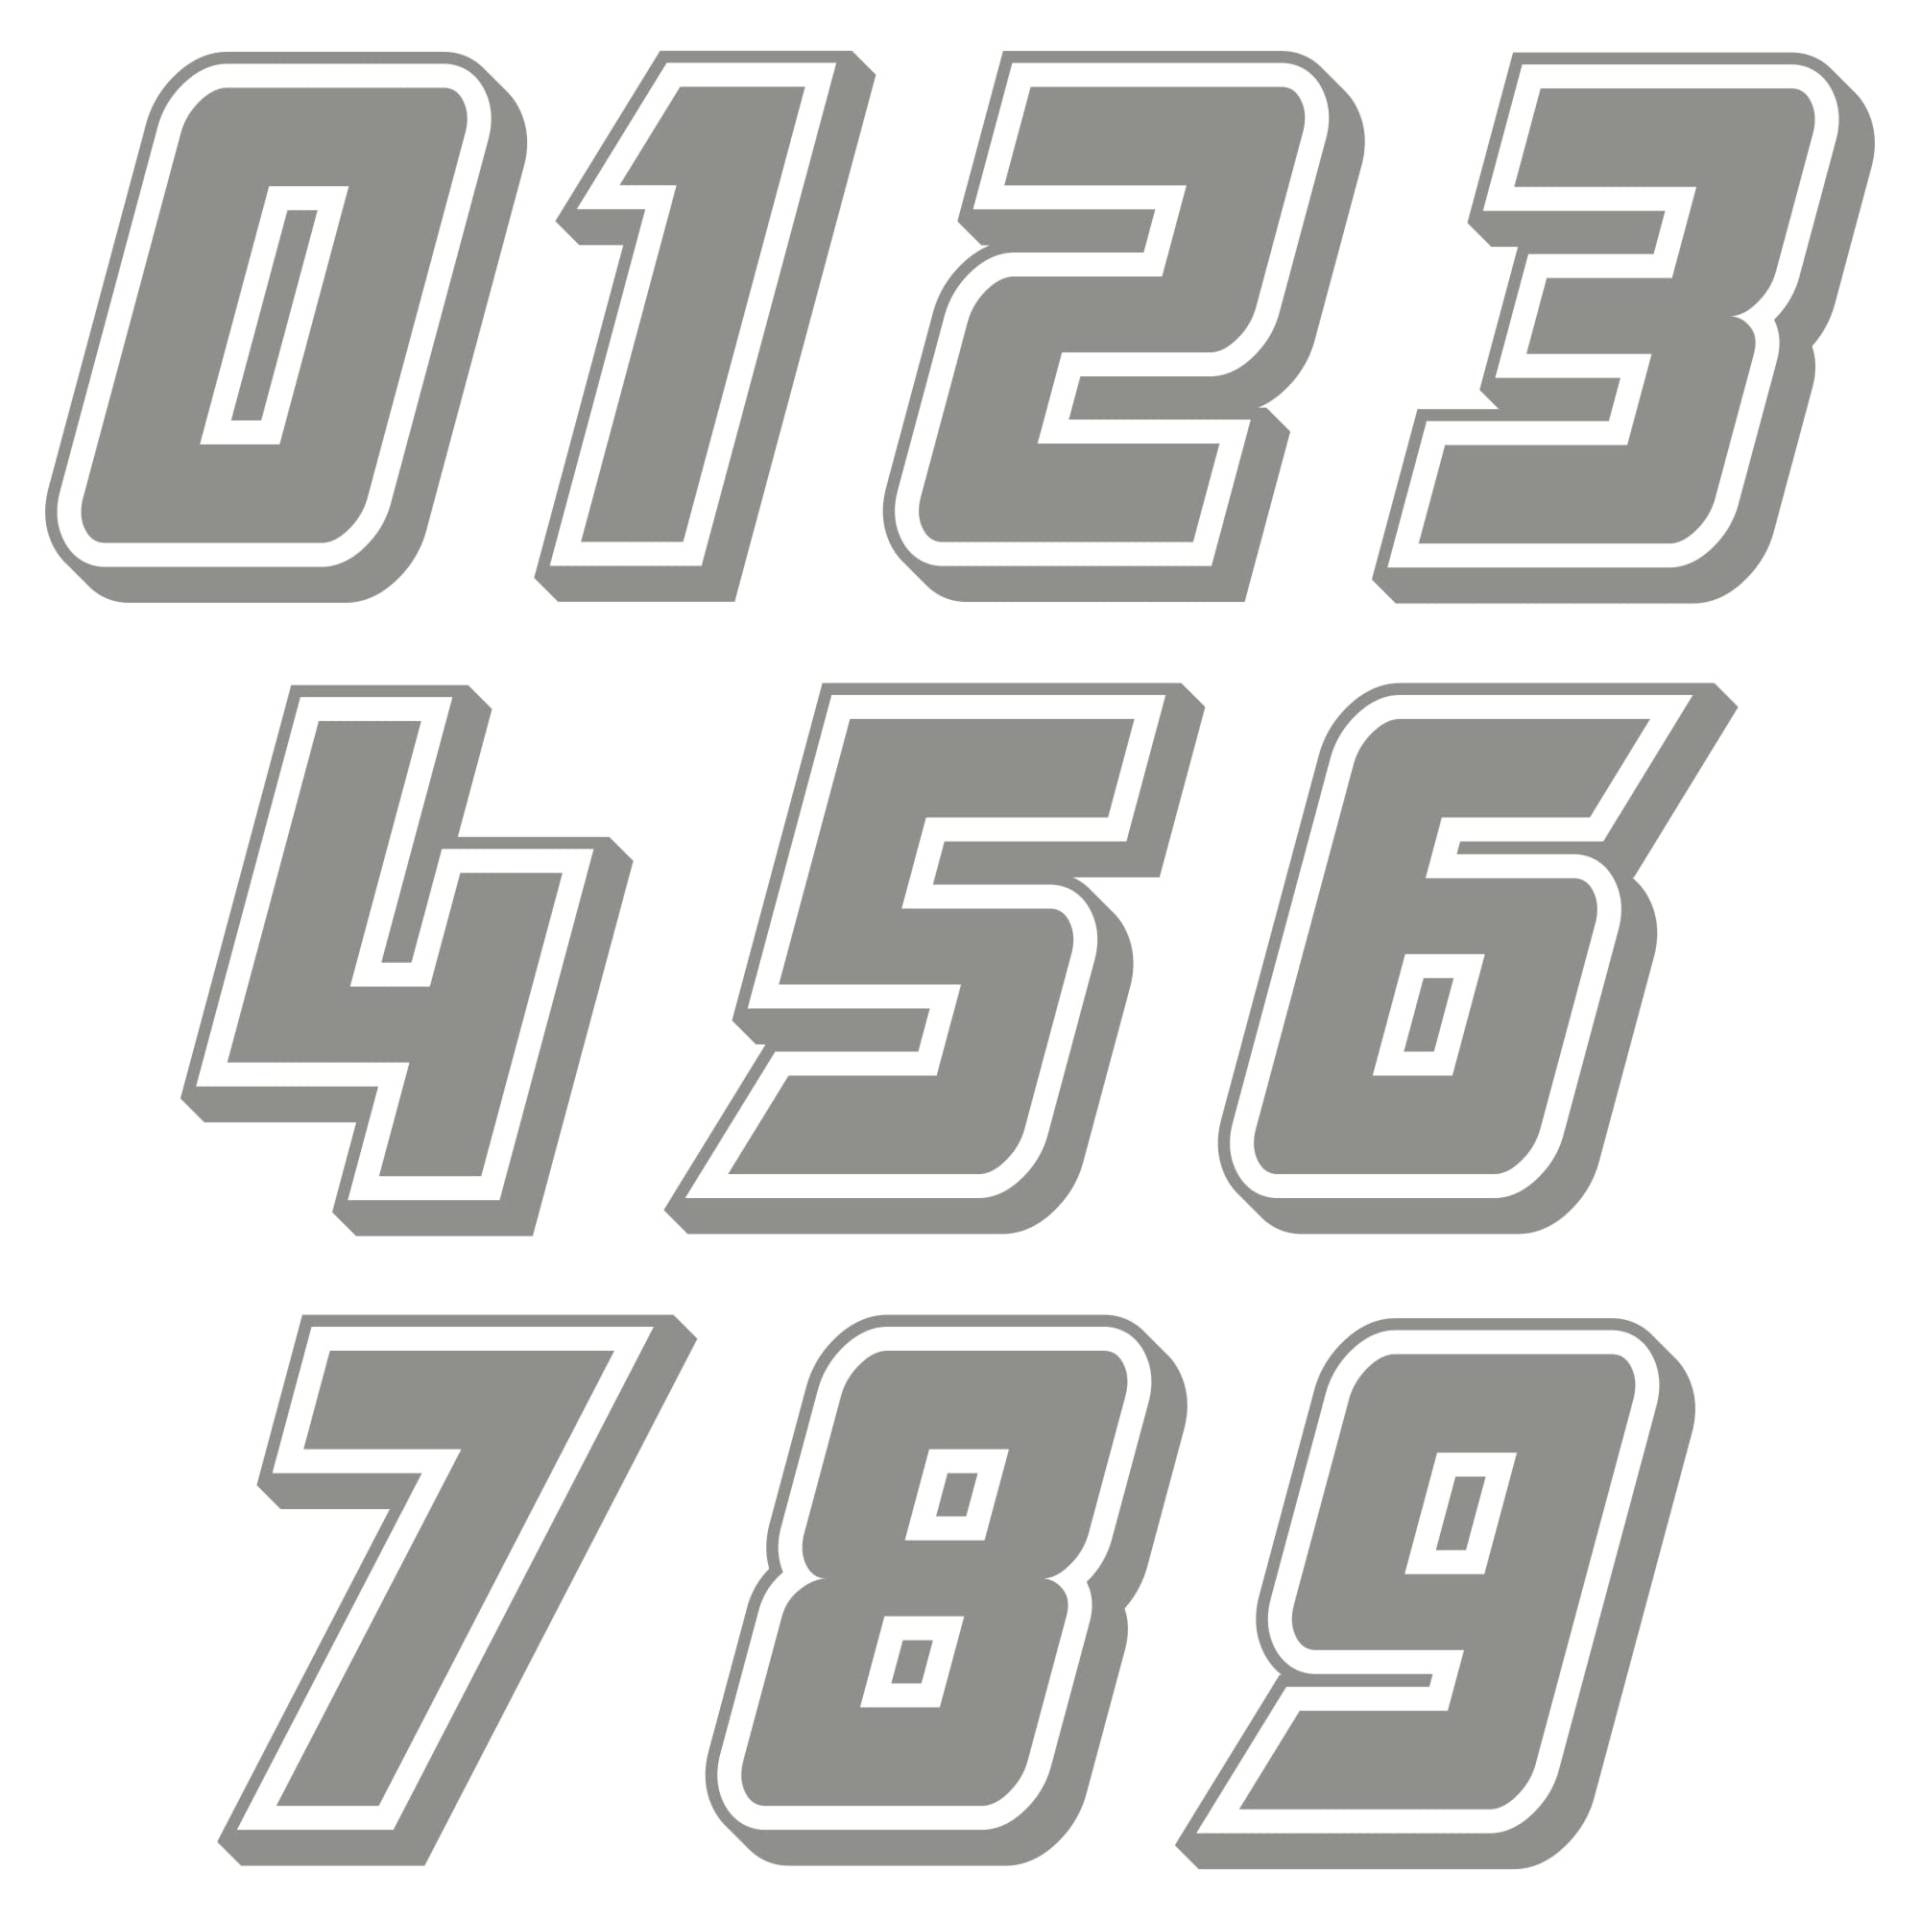 Autodomy Motorrad Motocross Nummer Startnummer Aufkleber Paket 10 Stück für Motorrad Quad ATV Auto (Silber) von AUTODOMY